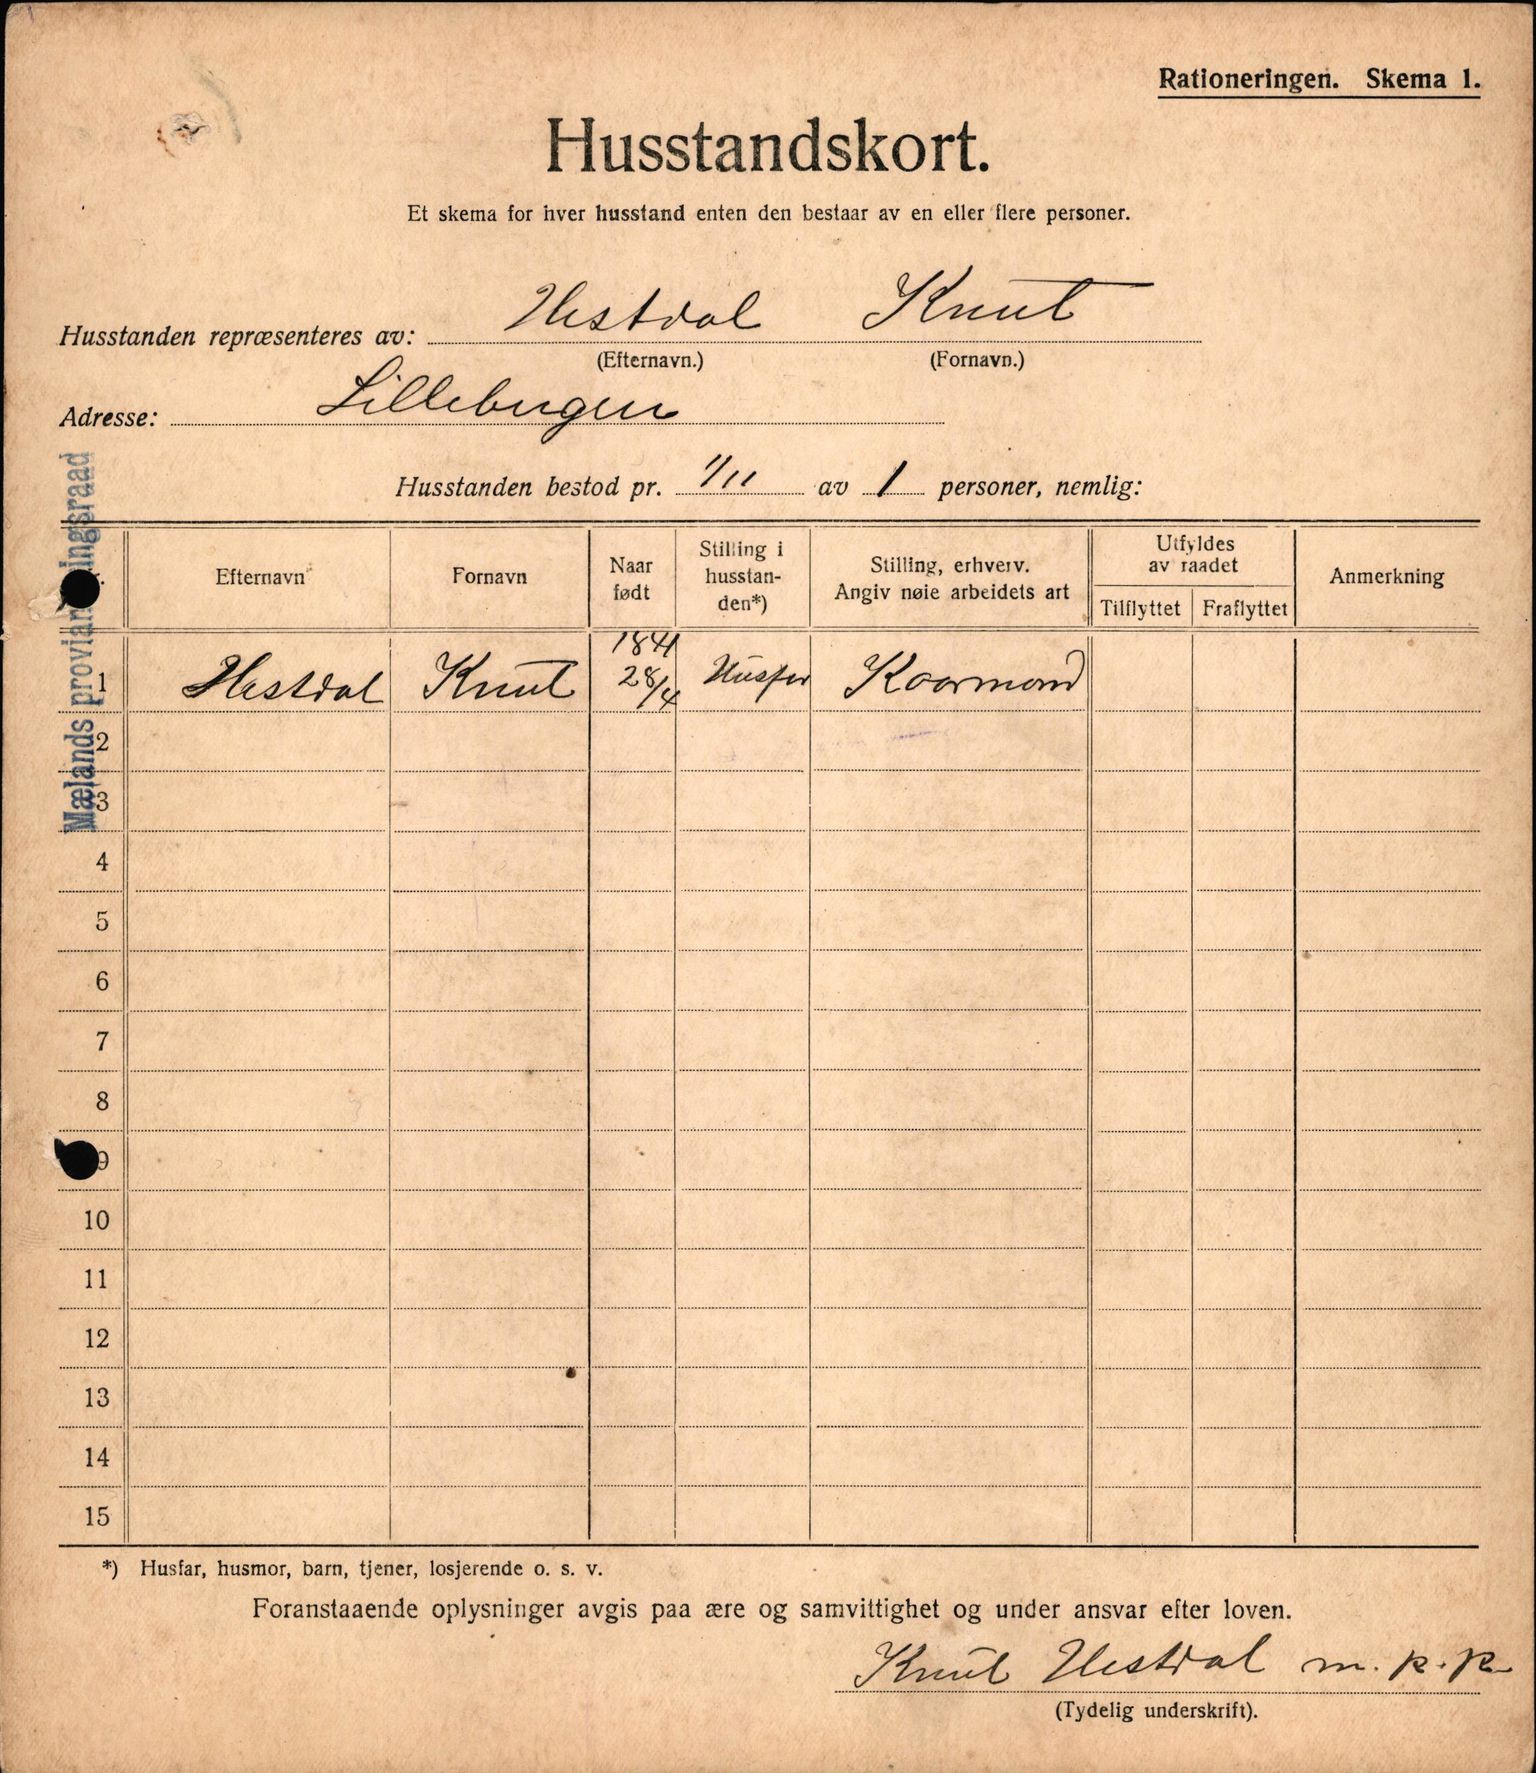 IKAH, Meland kommune, Provianteringsrådet, Husstander per 01.11.1917, 1917-1918, p. 269